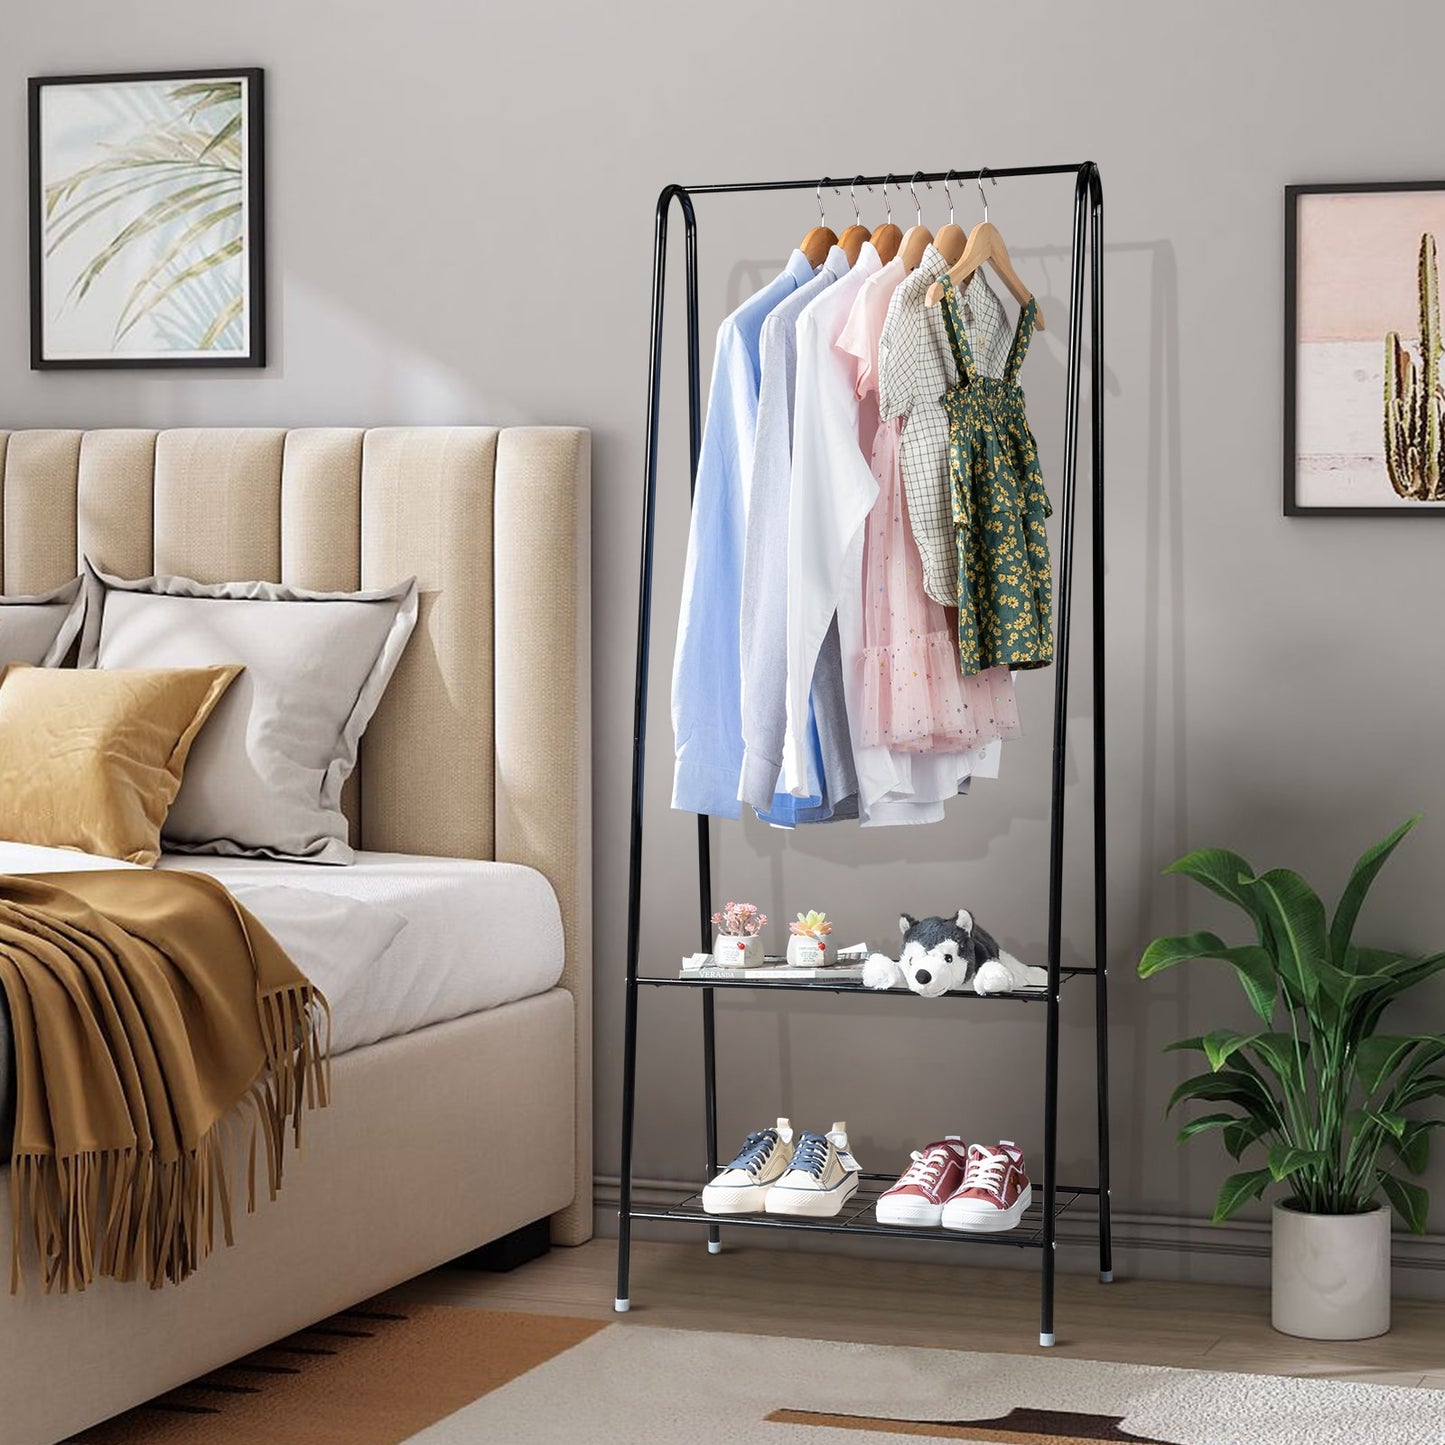 2-Tier Durable Shelf for Shoes Clothes Storage - DJVWellnessandPets